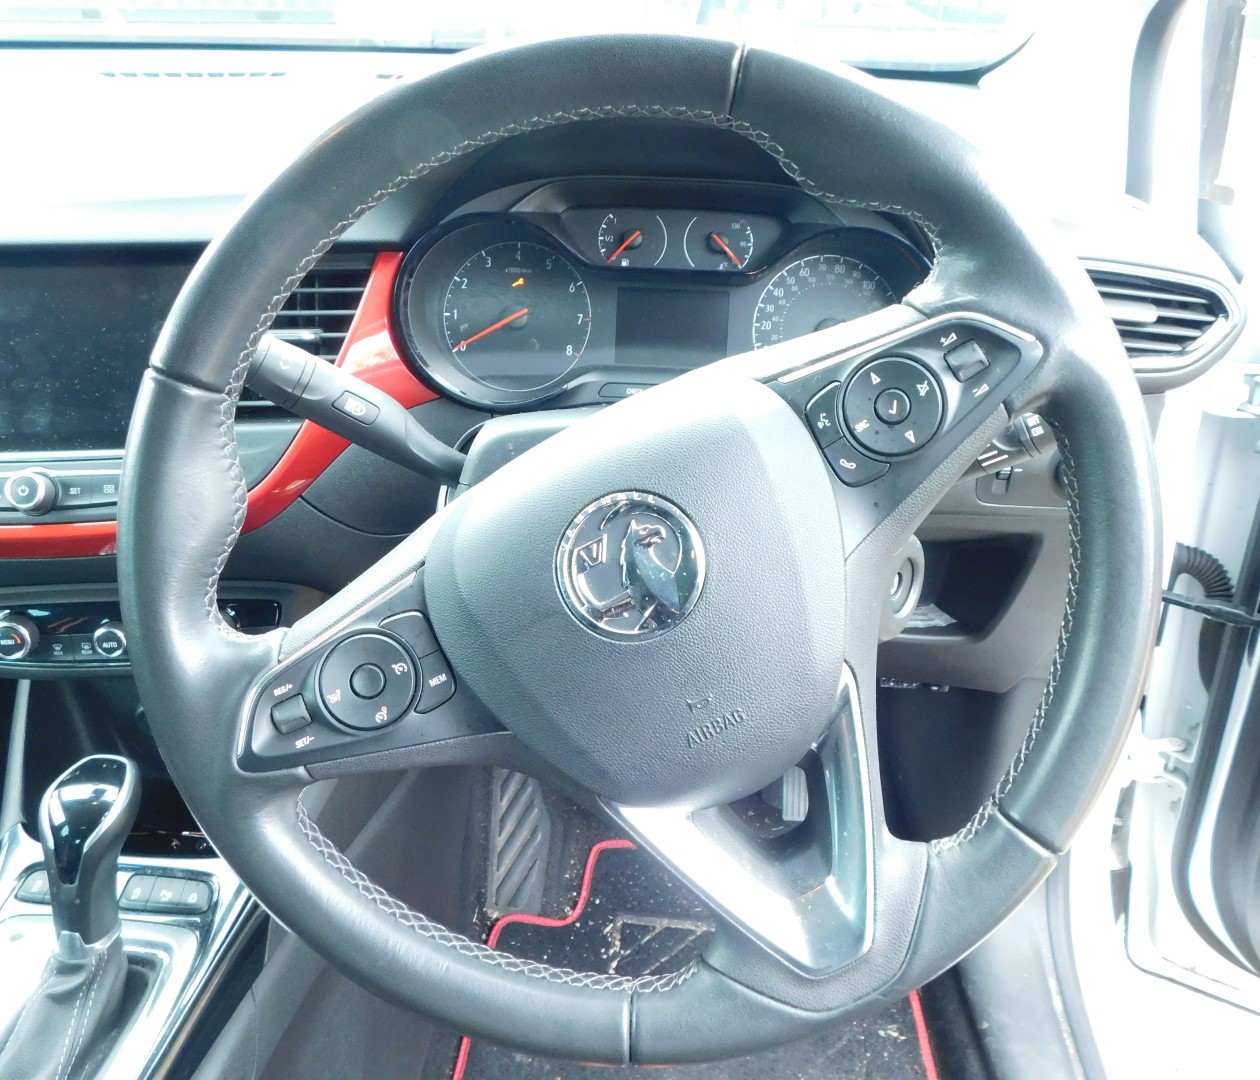 Vauxhall Crossland SRI NAV Turbo Auto five door hatchback, Registration DV21 AVB, petrol, automatic, - Image 4 of 9